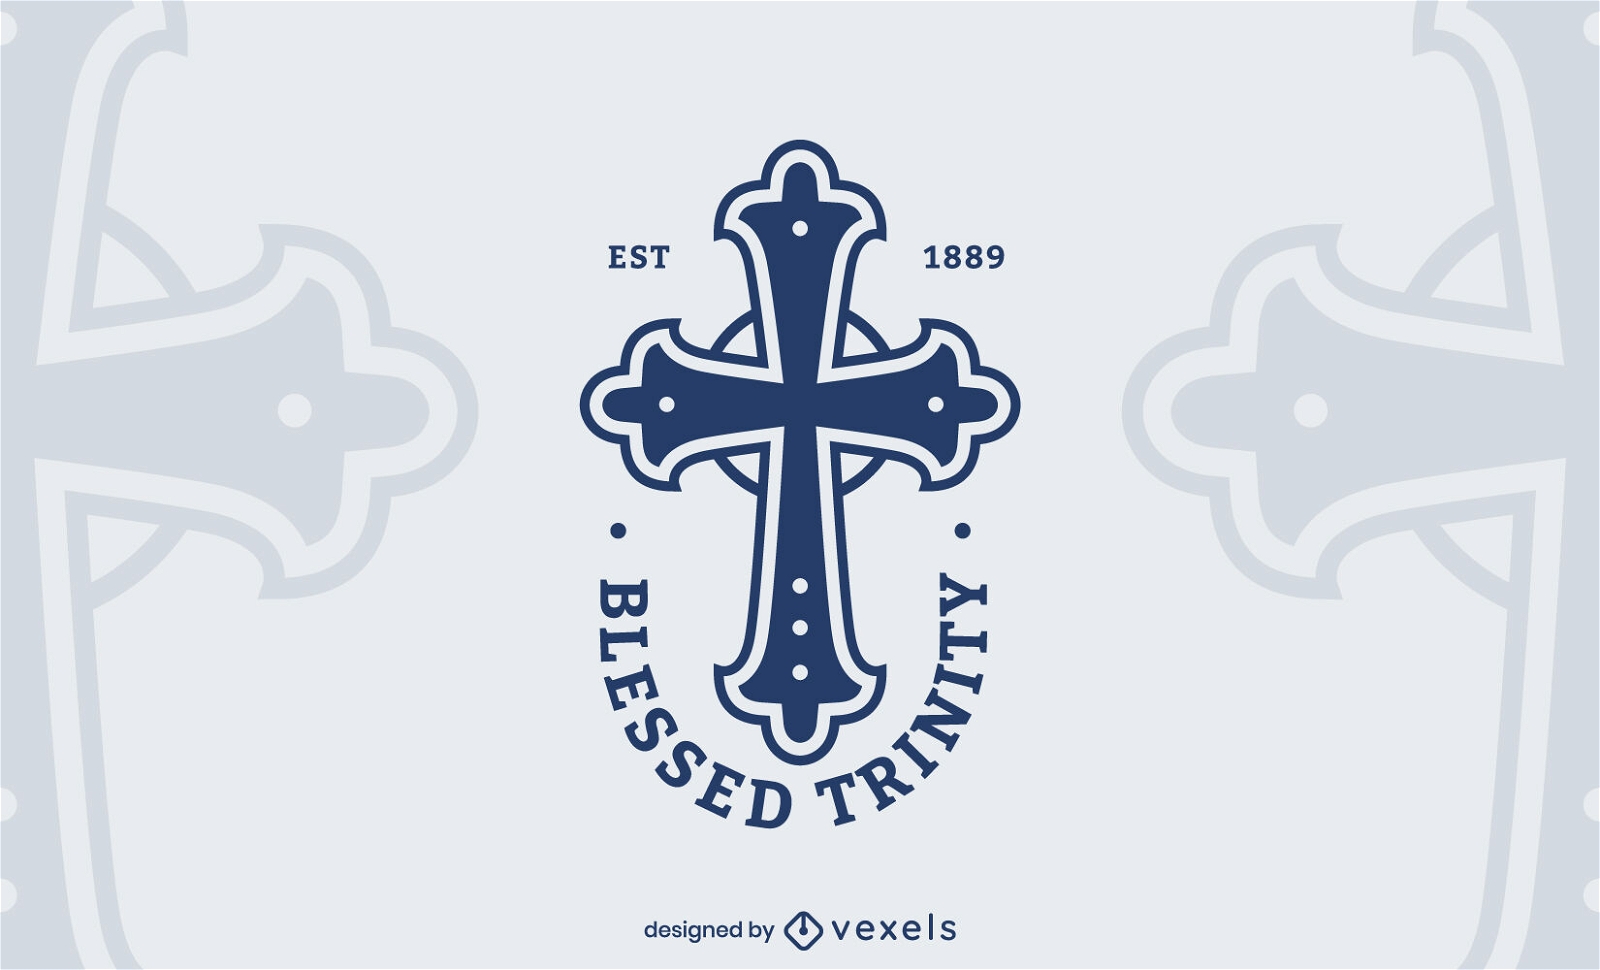 Blessed trinity logo design